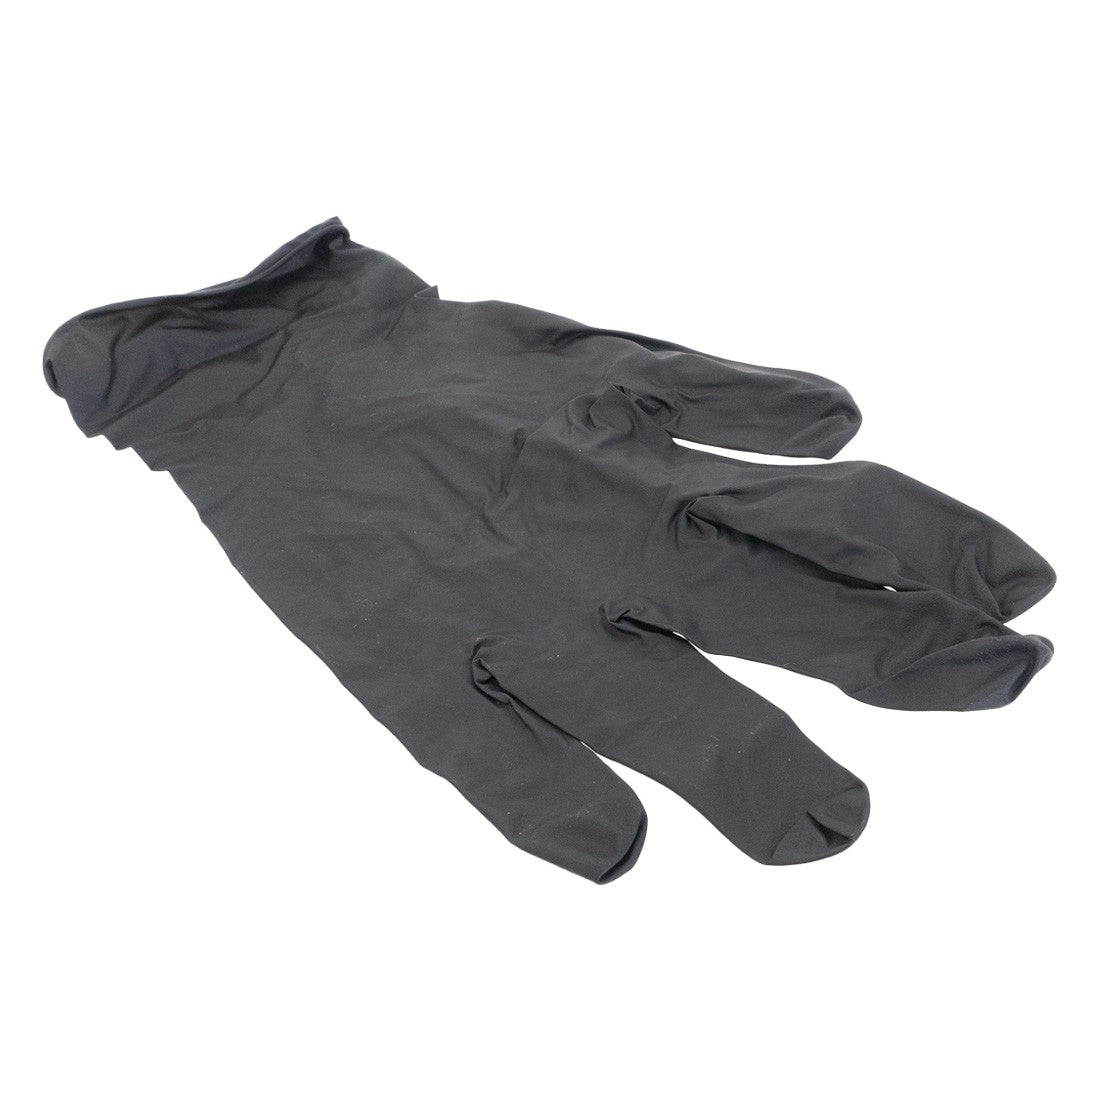 Tronex 9047 Nitrile Powder-Free Black Exam Glove Flat View